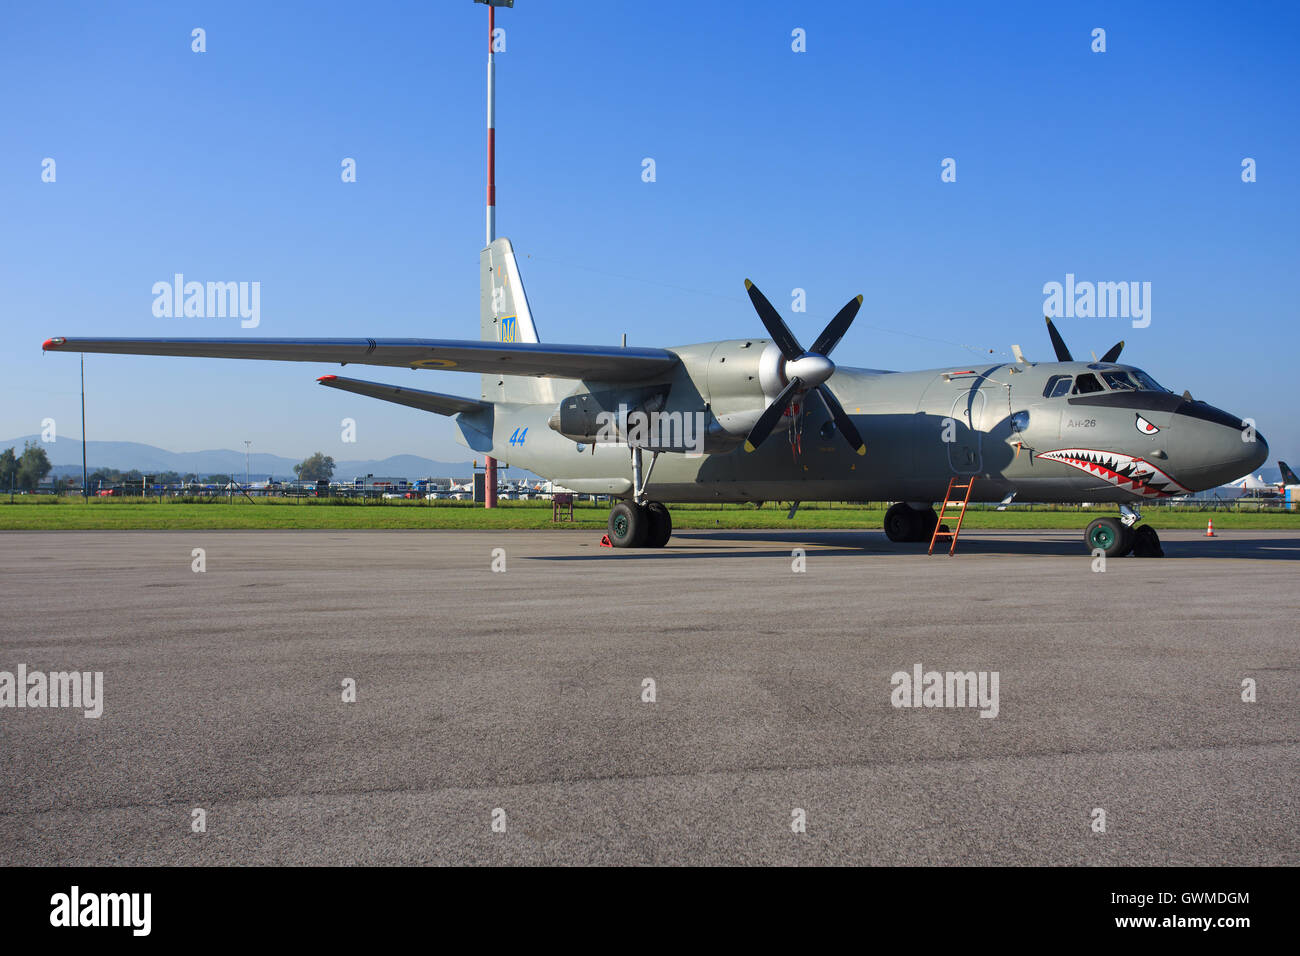 SLIAC, Slovacchia - 30 agosto: Antonov un-26 durante airshow SIAF in Sliac, Slovacchia Foto Stock